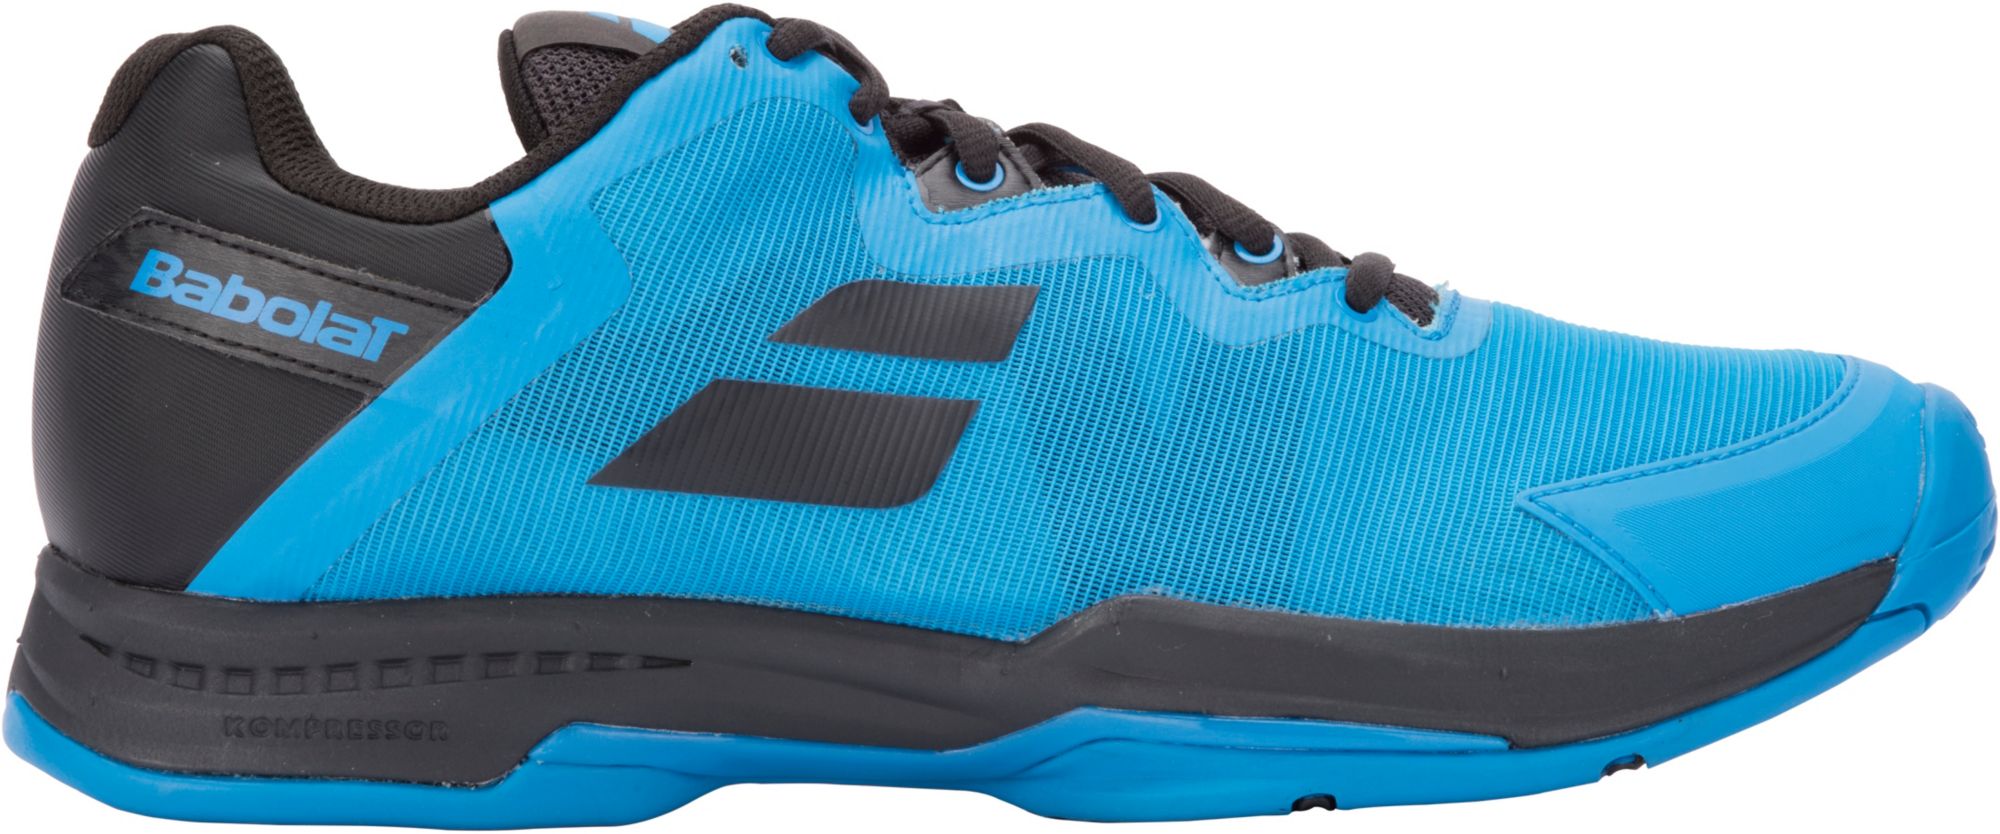 SFX 3 All Court Tennis Shoes (Diva Blue 